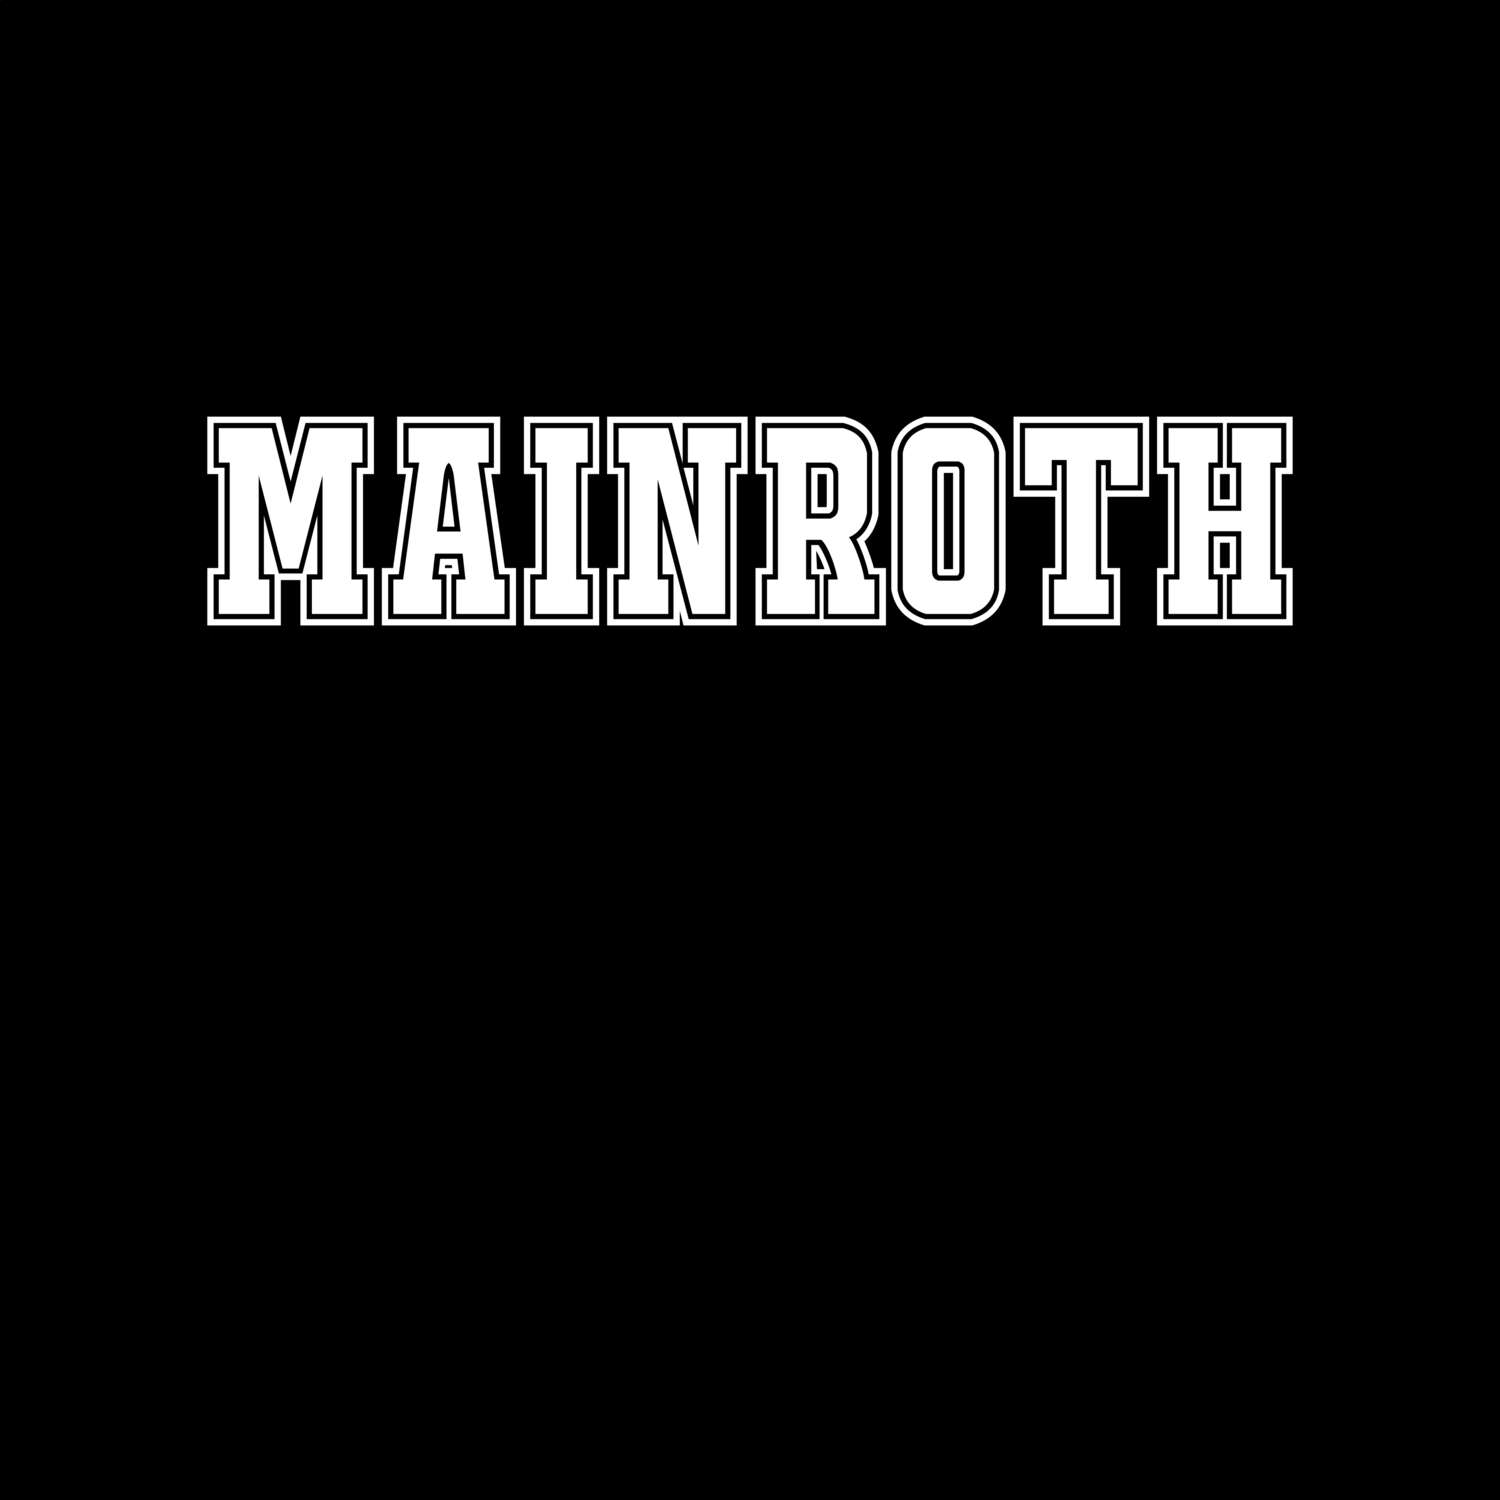 Mainroth T-Shirt »Classic«